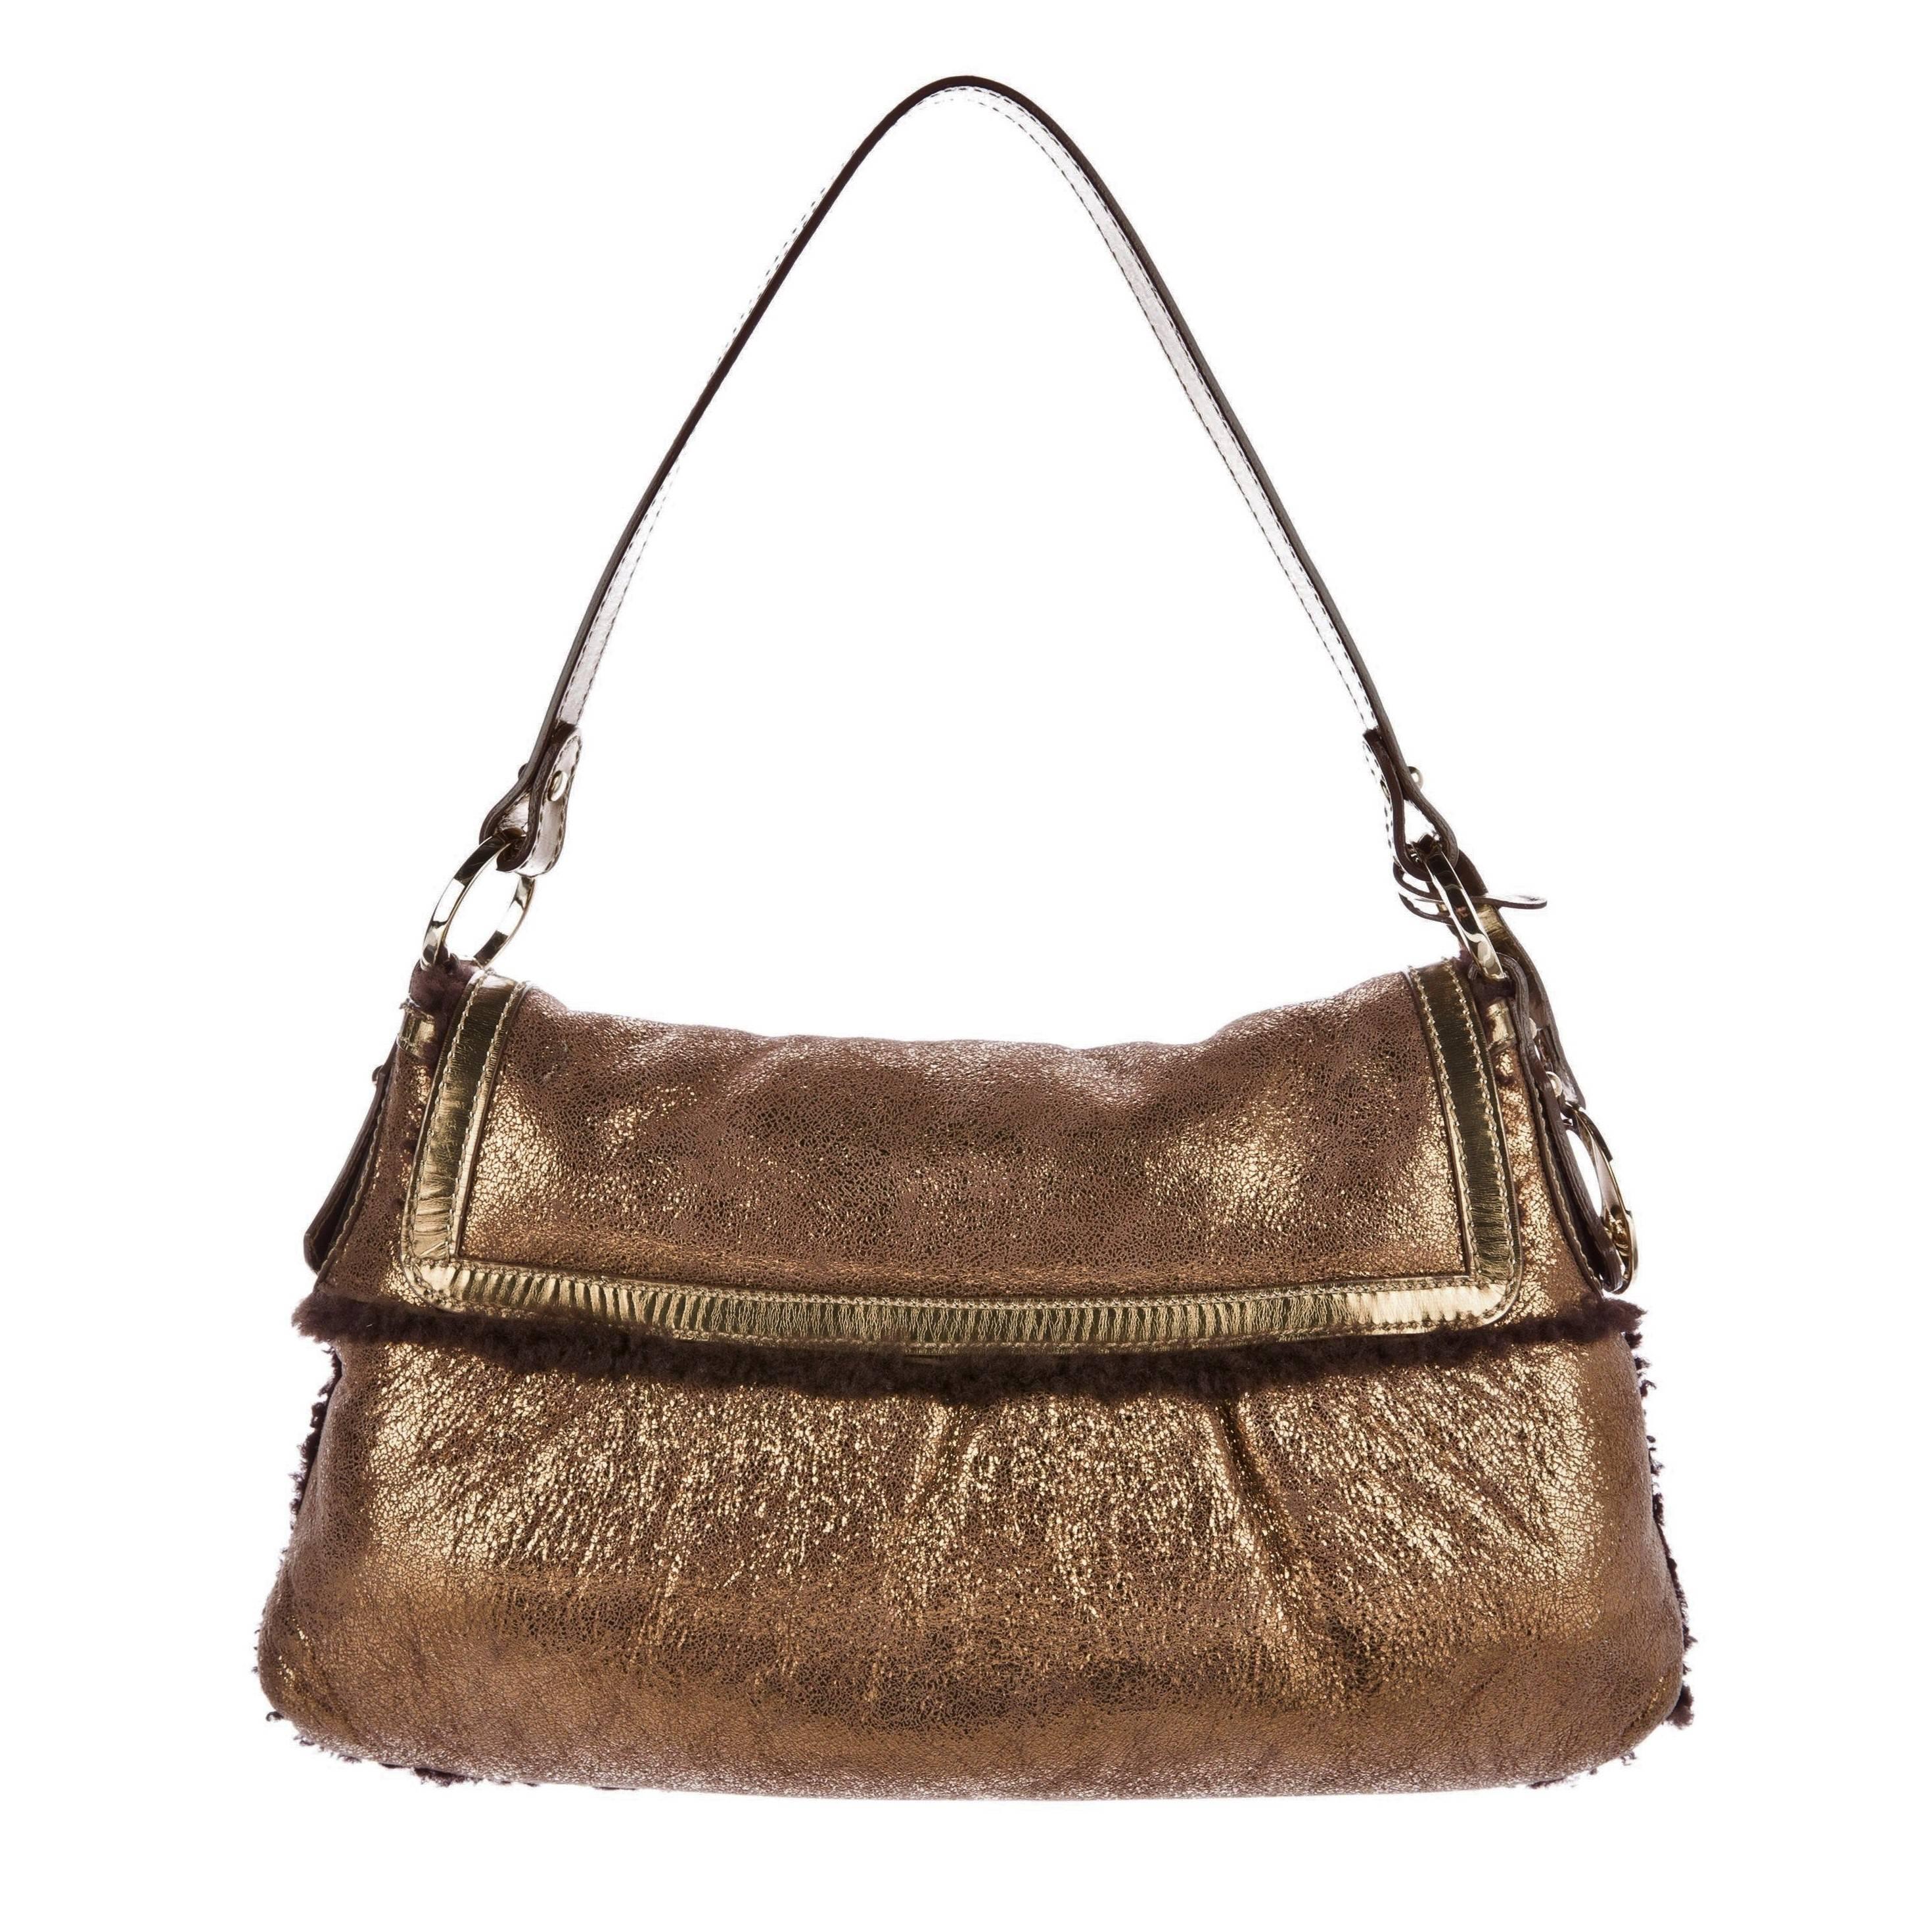 New Fendi Shearling Bronze Baguette Bag With Fendi Squirrel Purse Charm For Sale 4